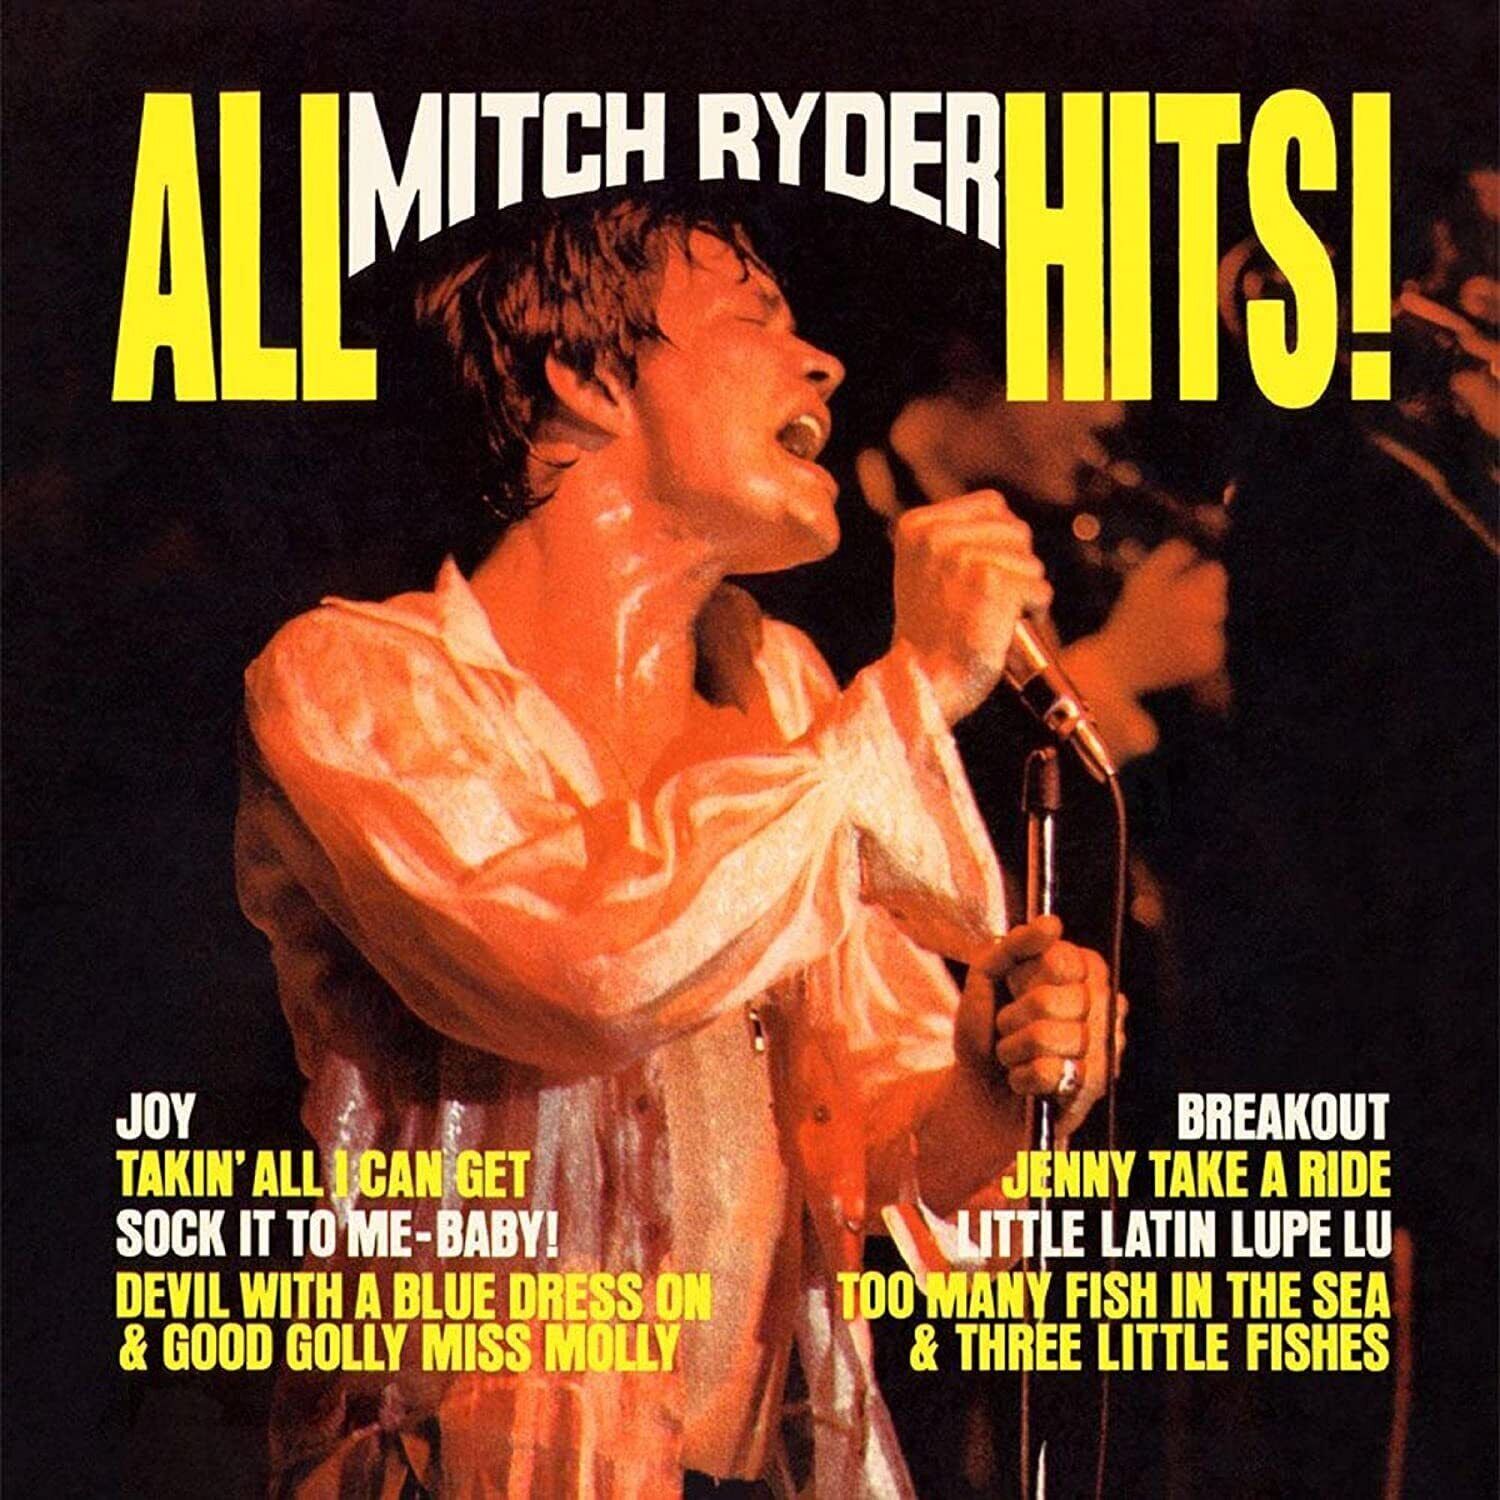 Mitch Ryder & The Detroi All Mitch Ryder Hits -Original Greatest Hits Au (Vinyl)